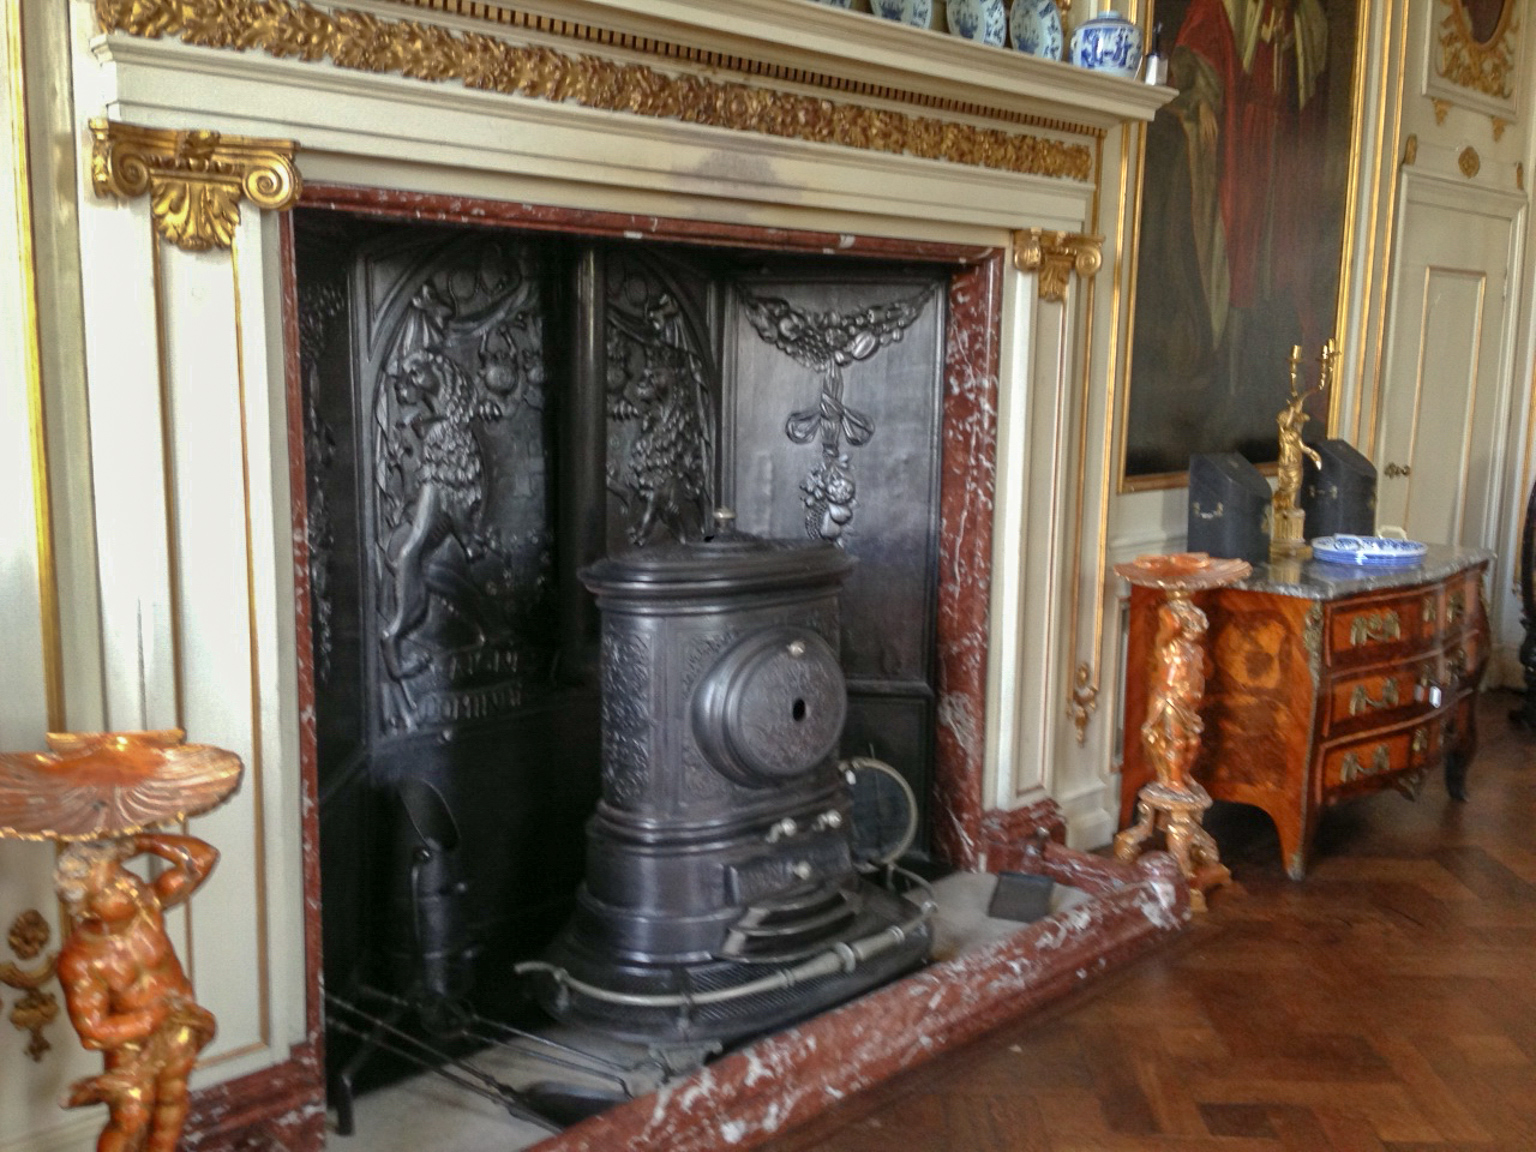 Decorated, unused fireplace